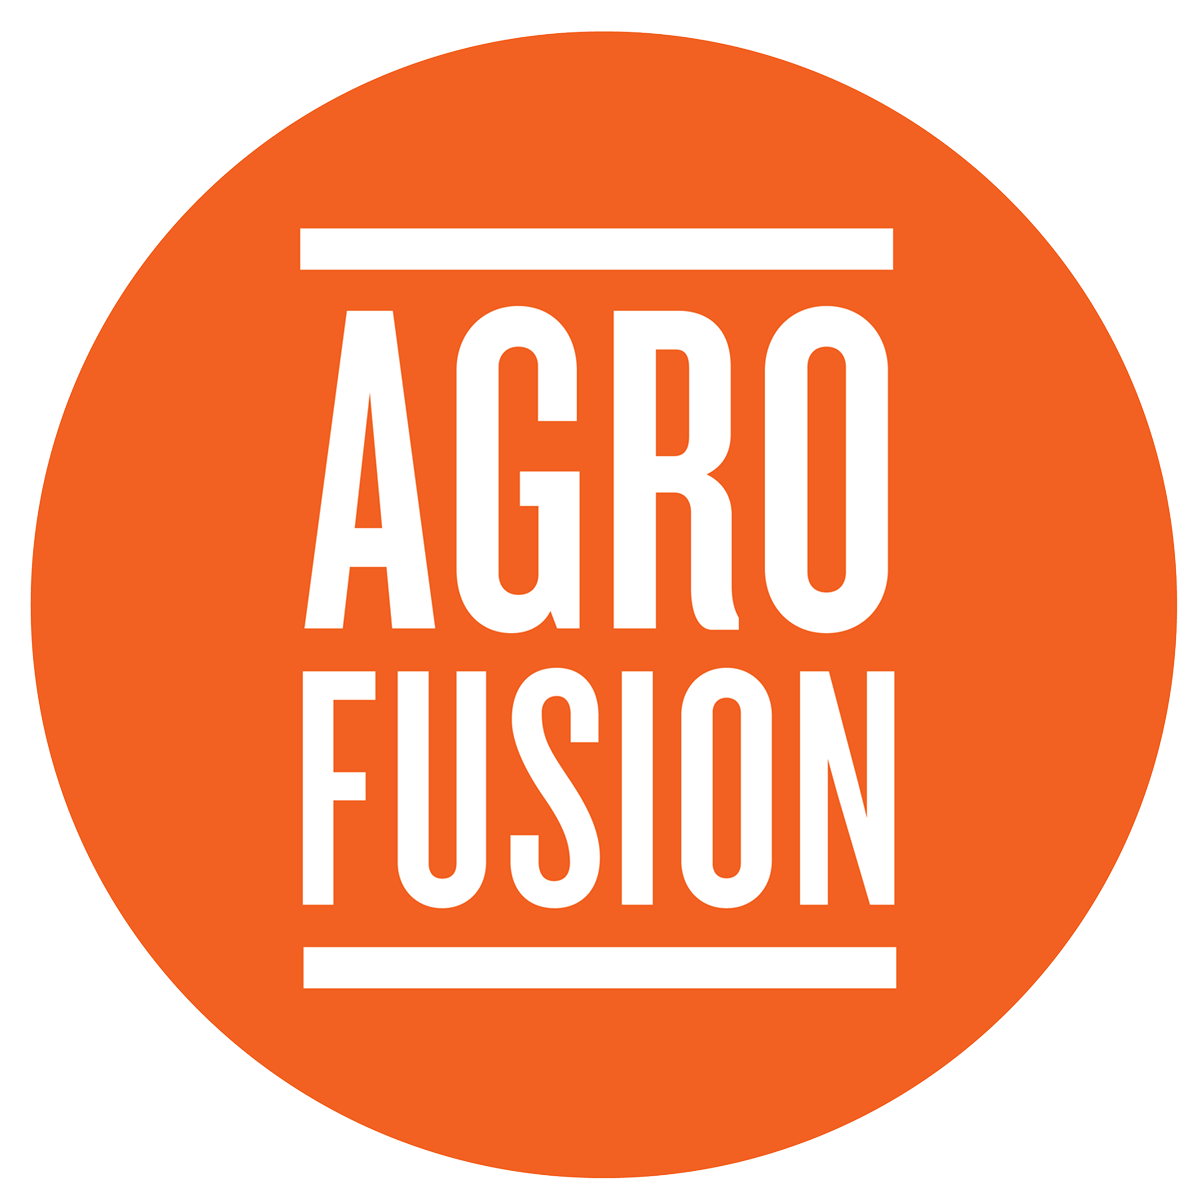 AgroFusion